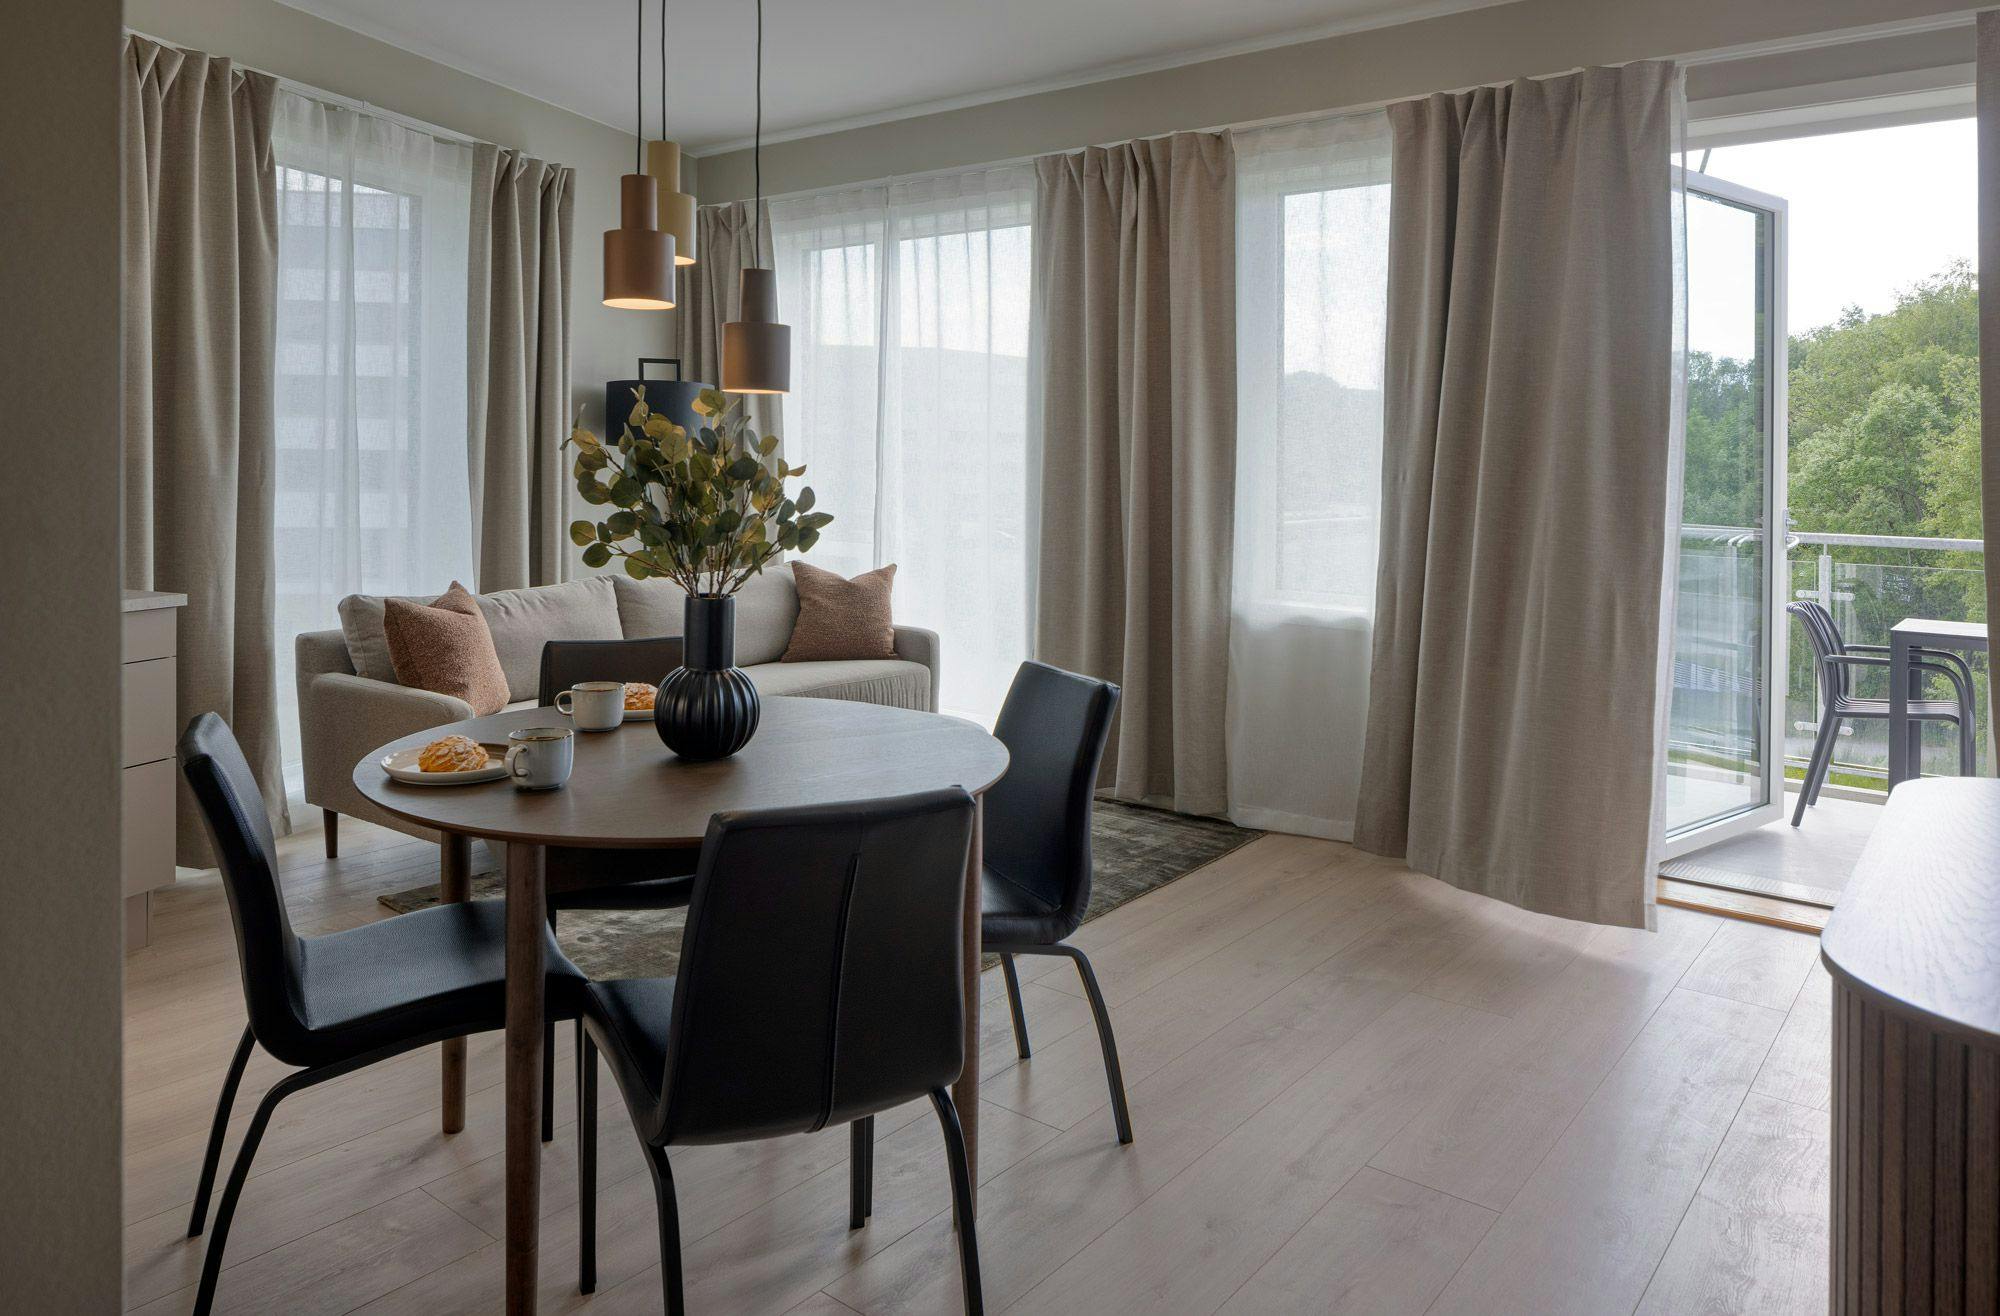 Photo: Living room of premium one-bedroom apartment at Hinna location.